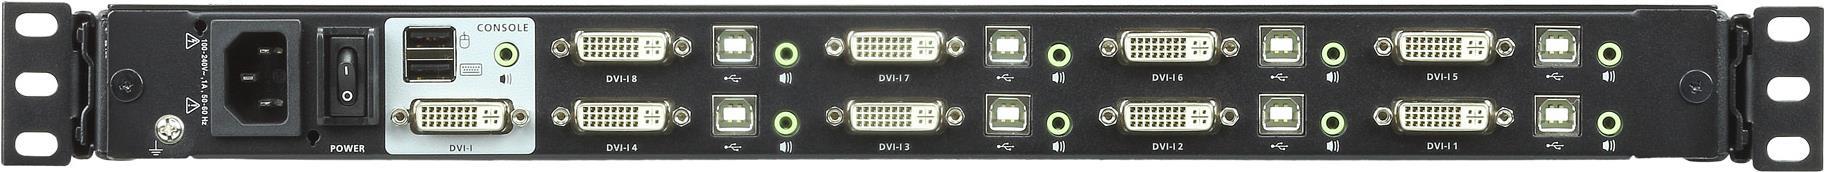 ATEN CL6708MW  43cm LCD KVM Switch, USB-DVI  8 Port (D)